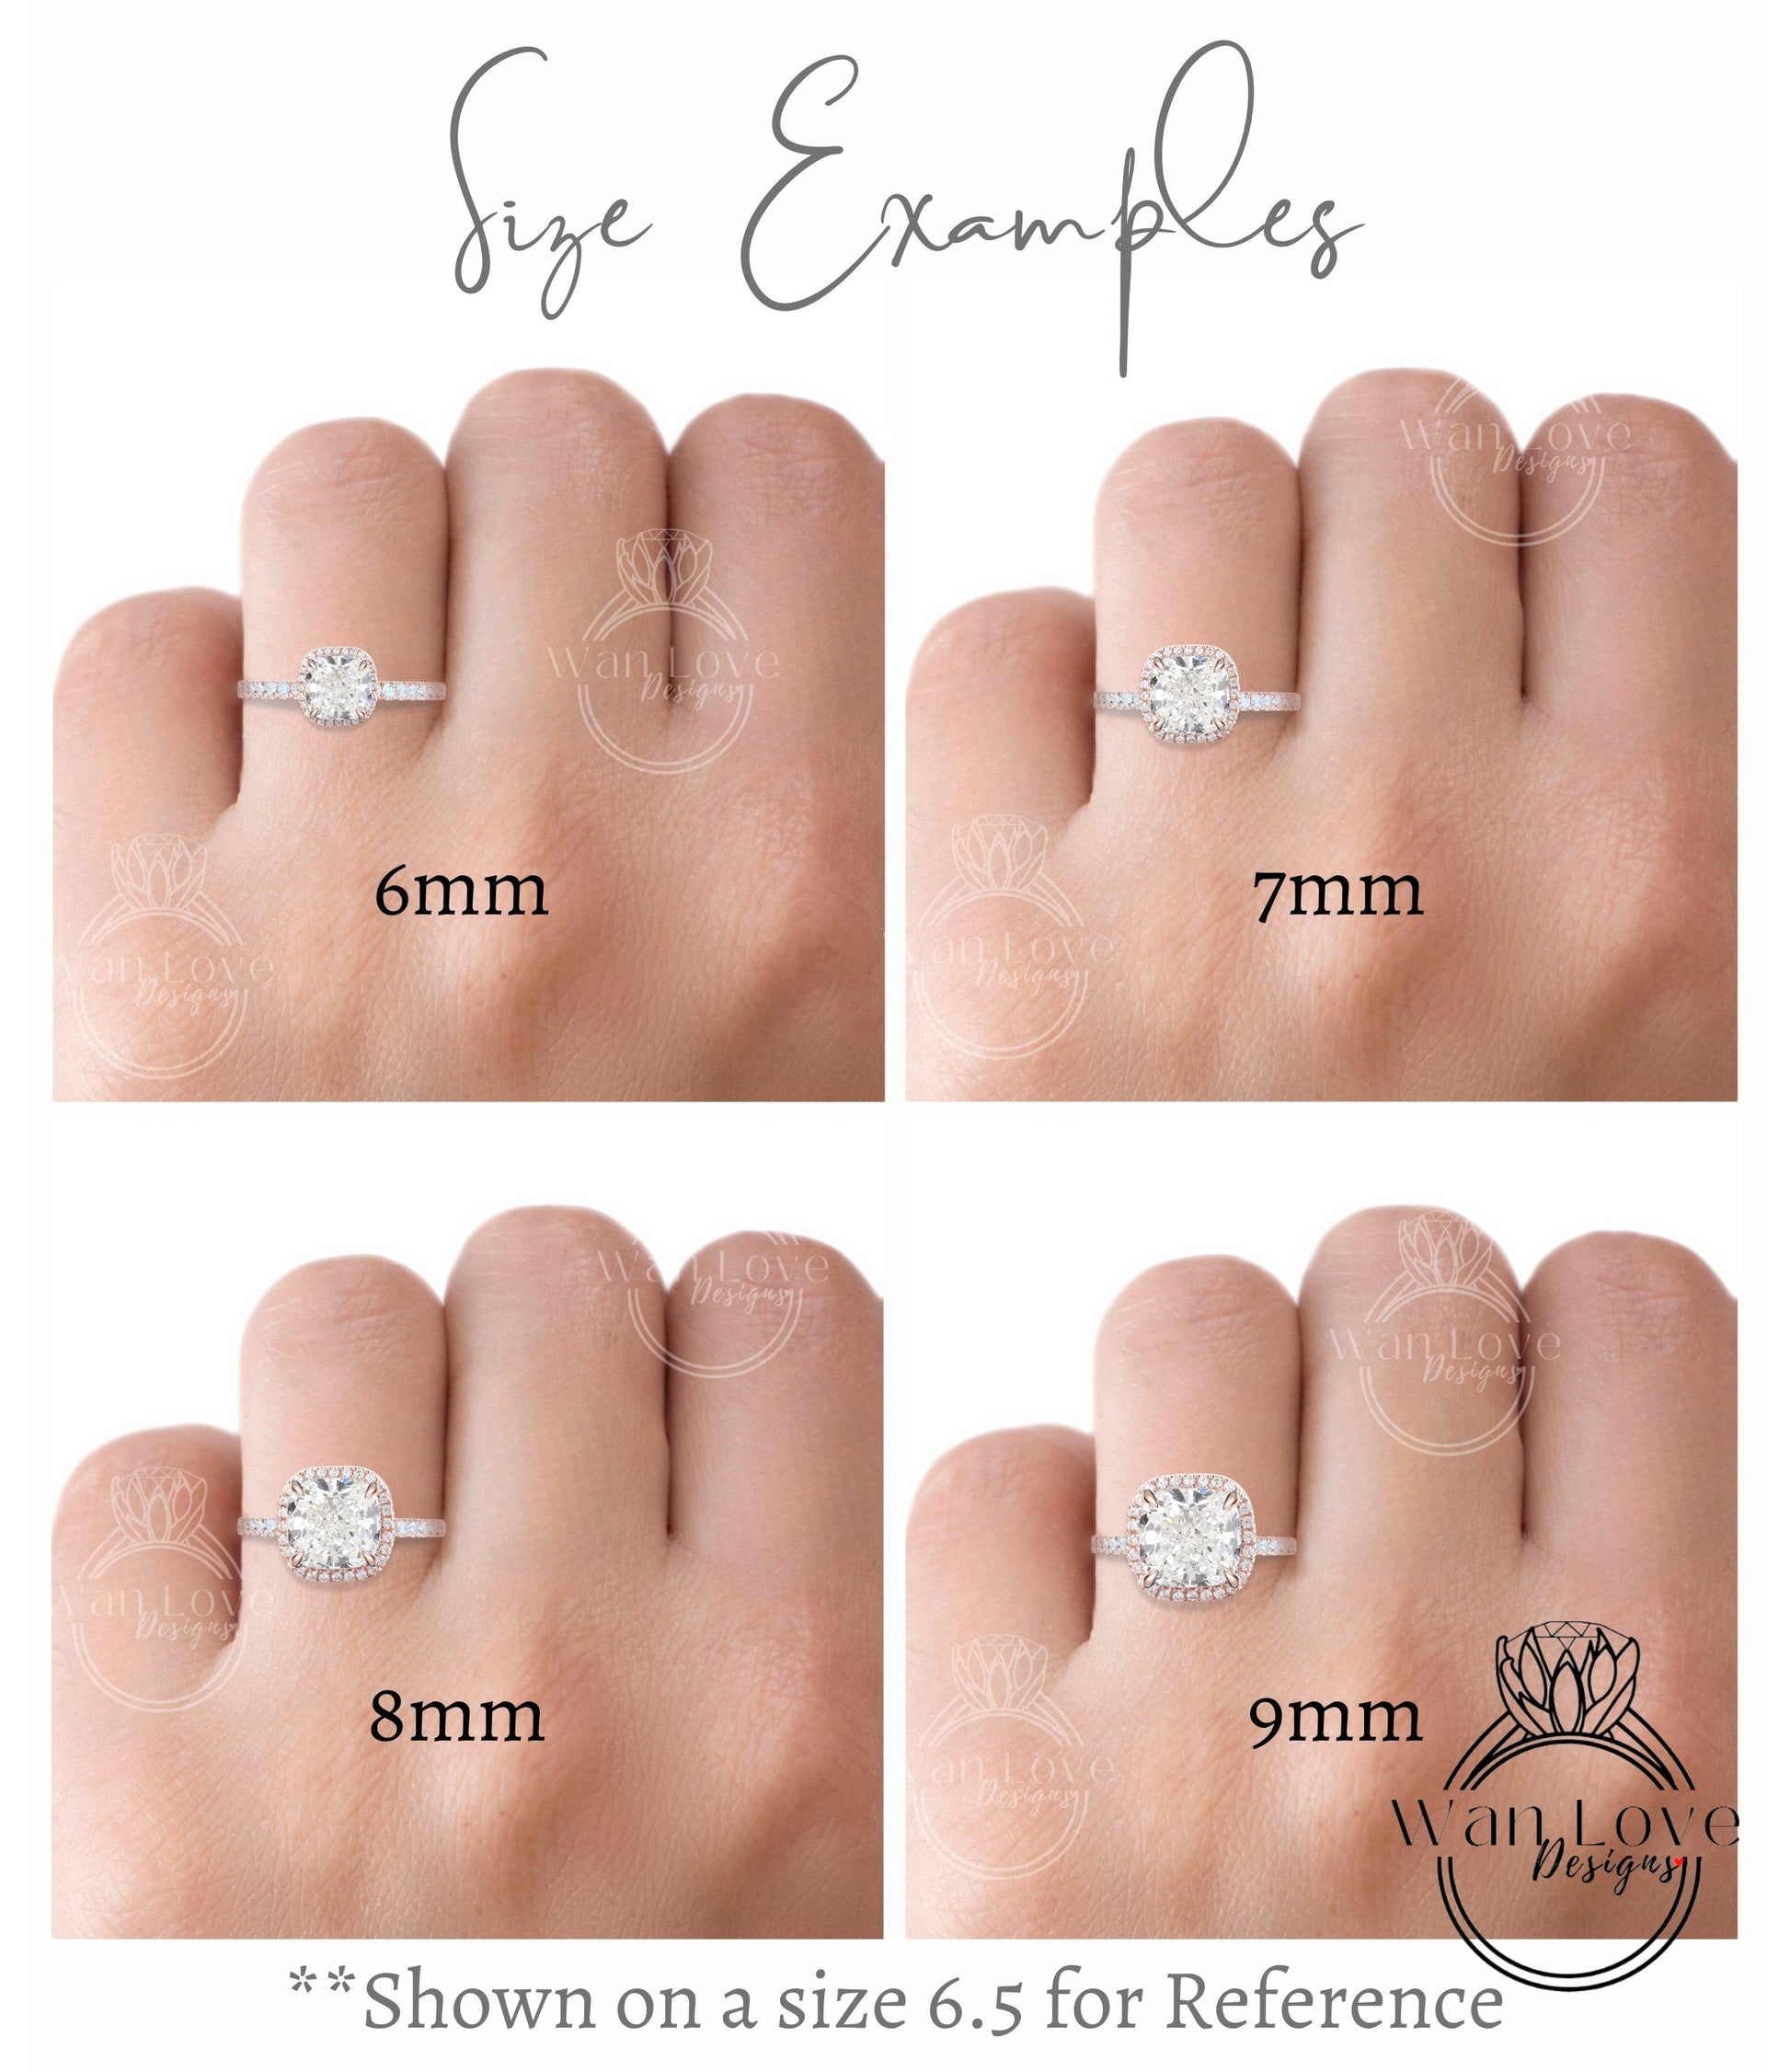 Vintage Diamond Engagement Ring Cushion Halo Floral Shaped Ring Antique milgrain scalloped diamond Wedding Bridal Ring Anniversary promise Wan Love Designs